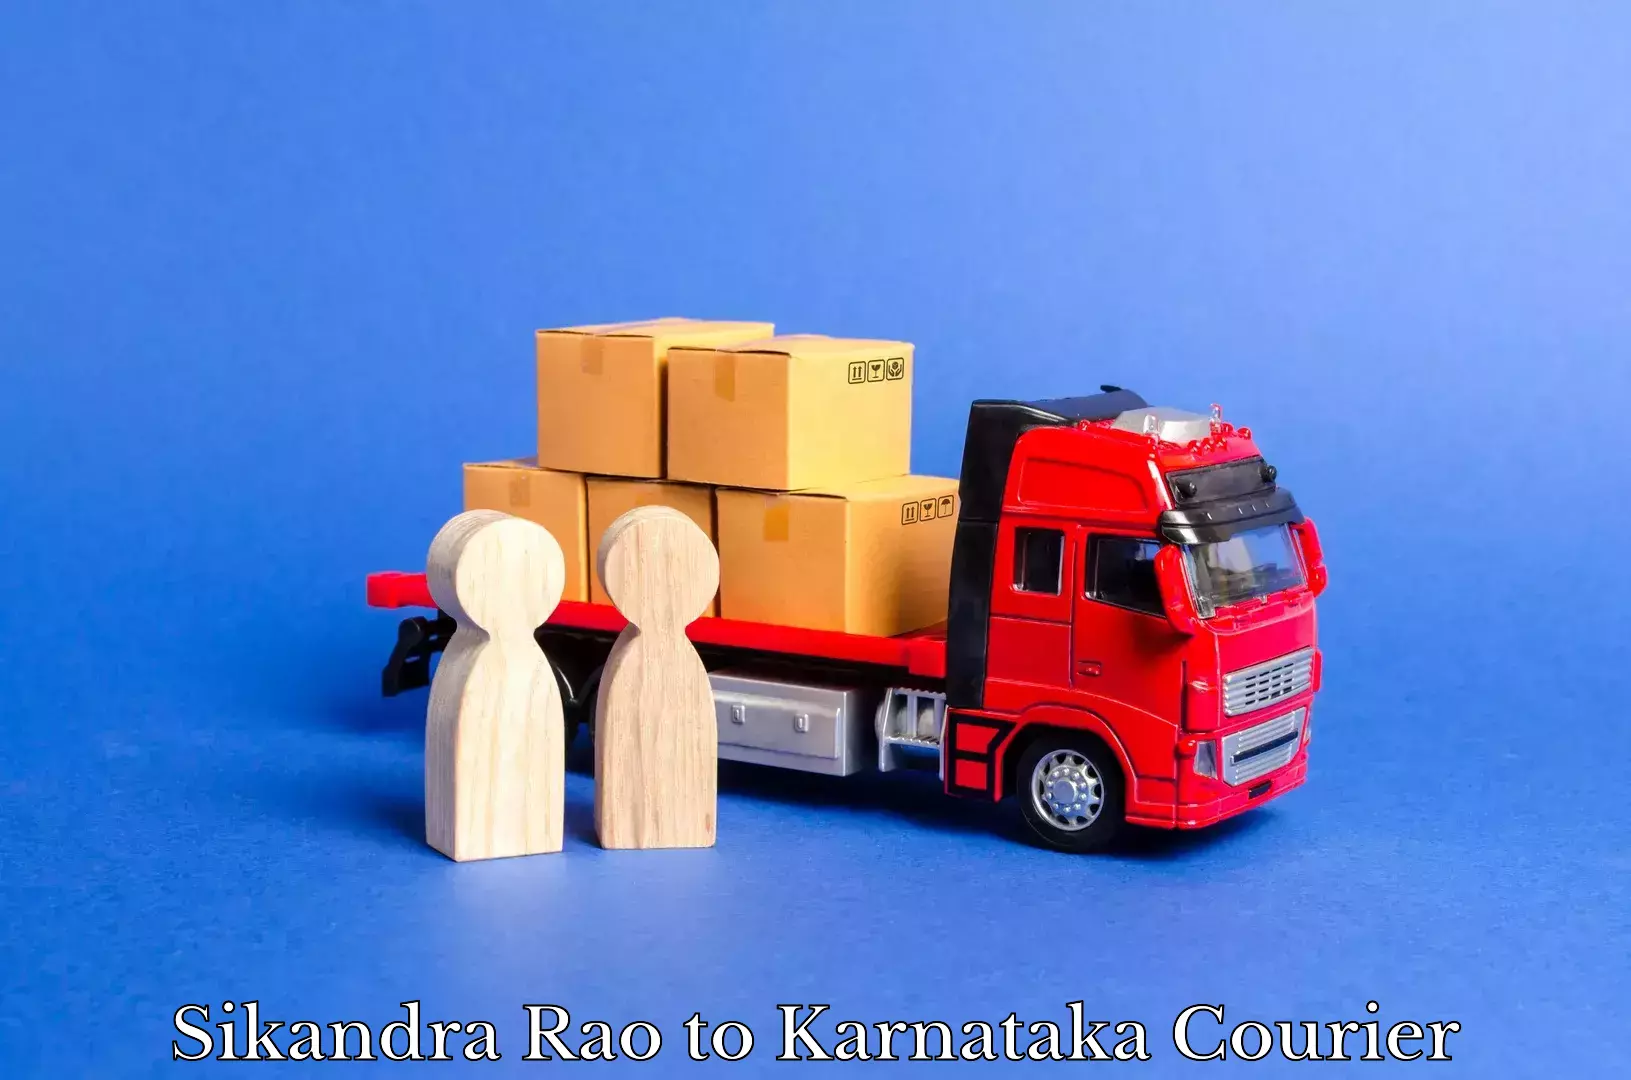 High-speed delivery Sikandra Rao to Karnataka